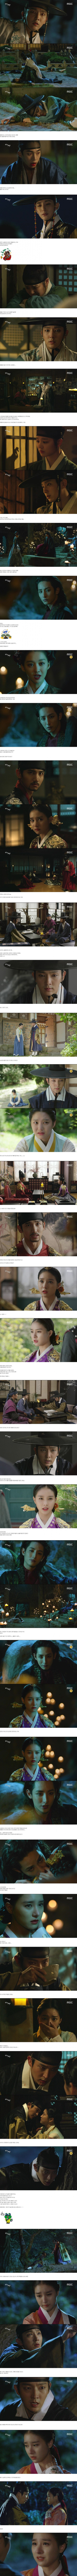 episode 14 captures for the Korean drama 'Scholar Who Walks the Night'